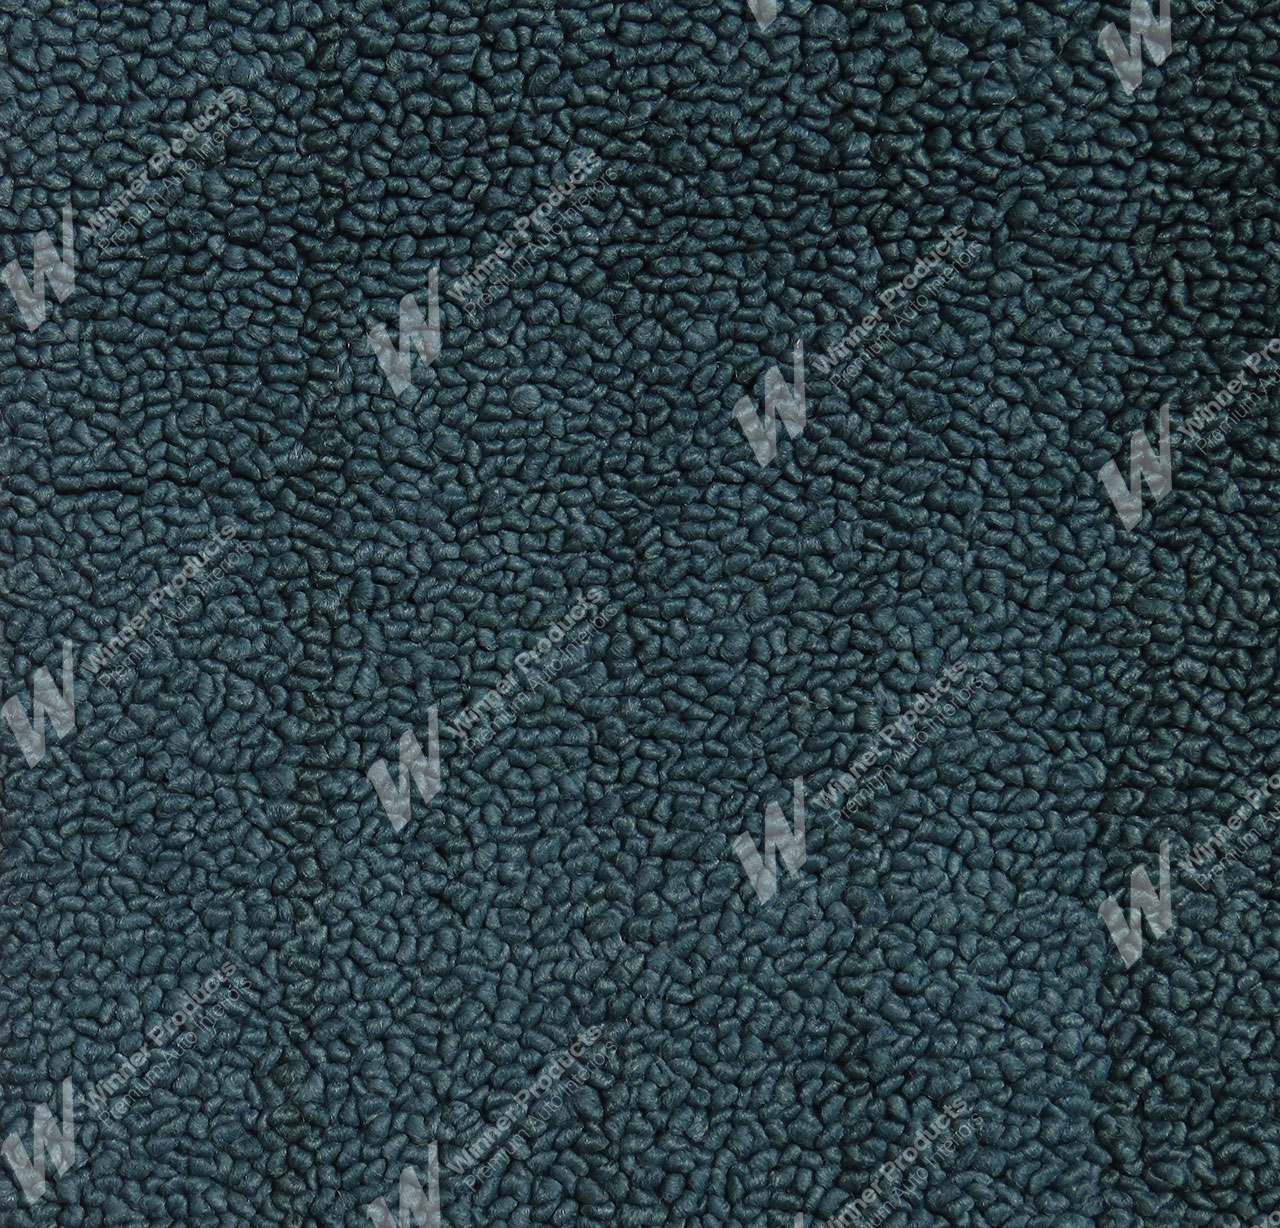 Holden Torana LC Torana S Coupe 43B Turquoise Mist Carpet (Image 1 of 1)